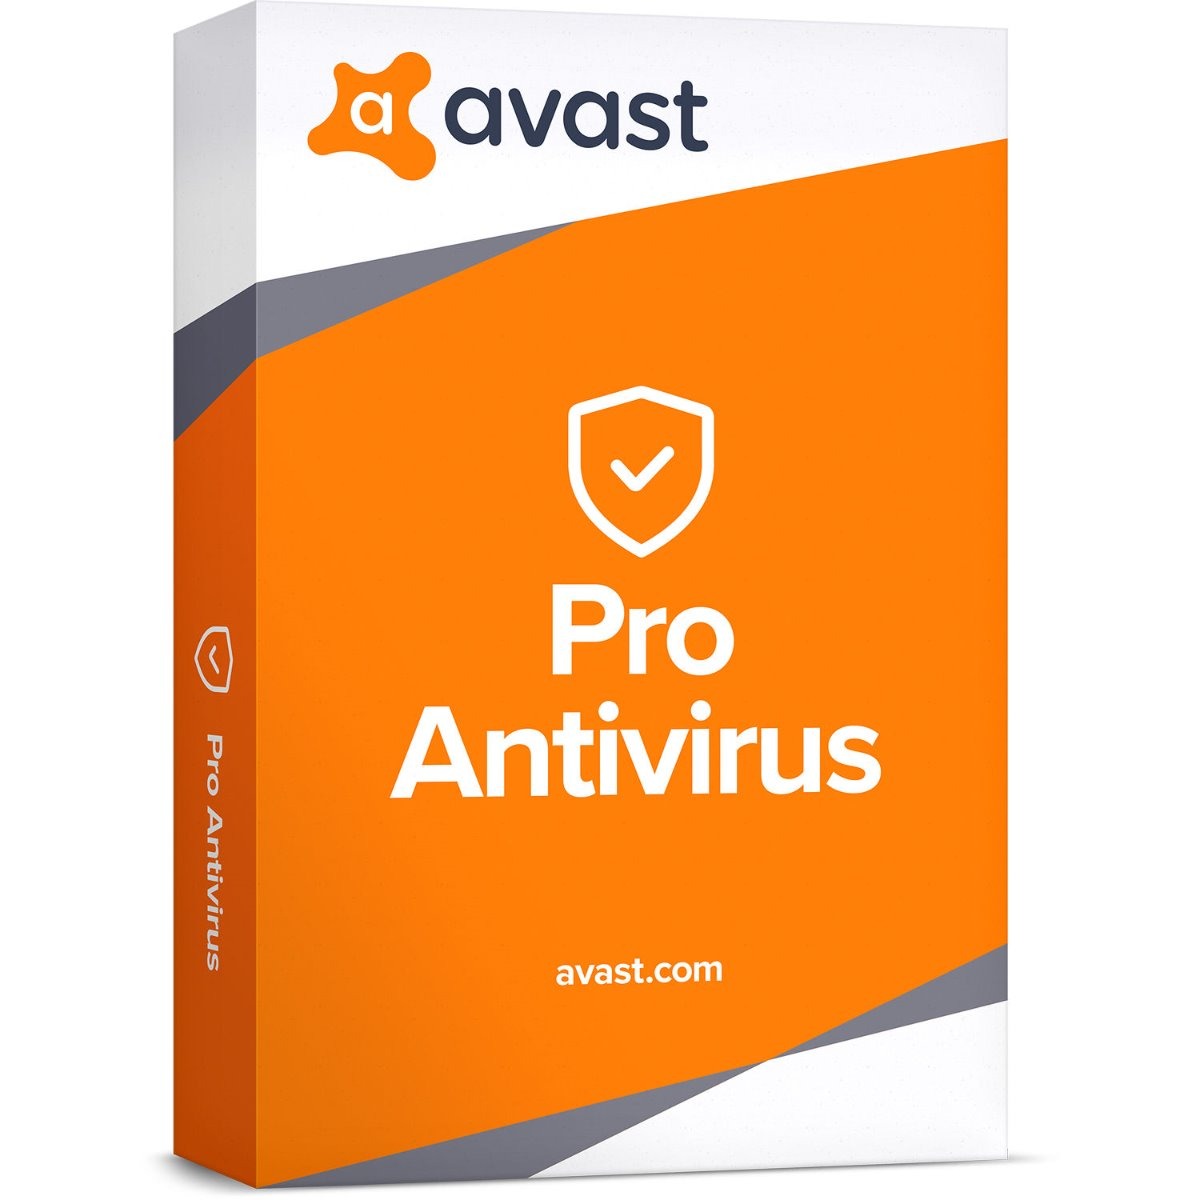 antivirus software pc download